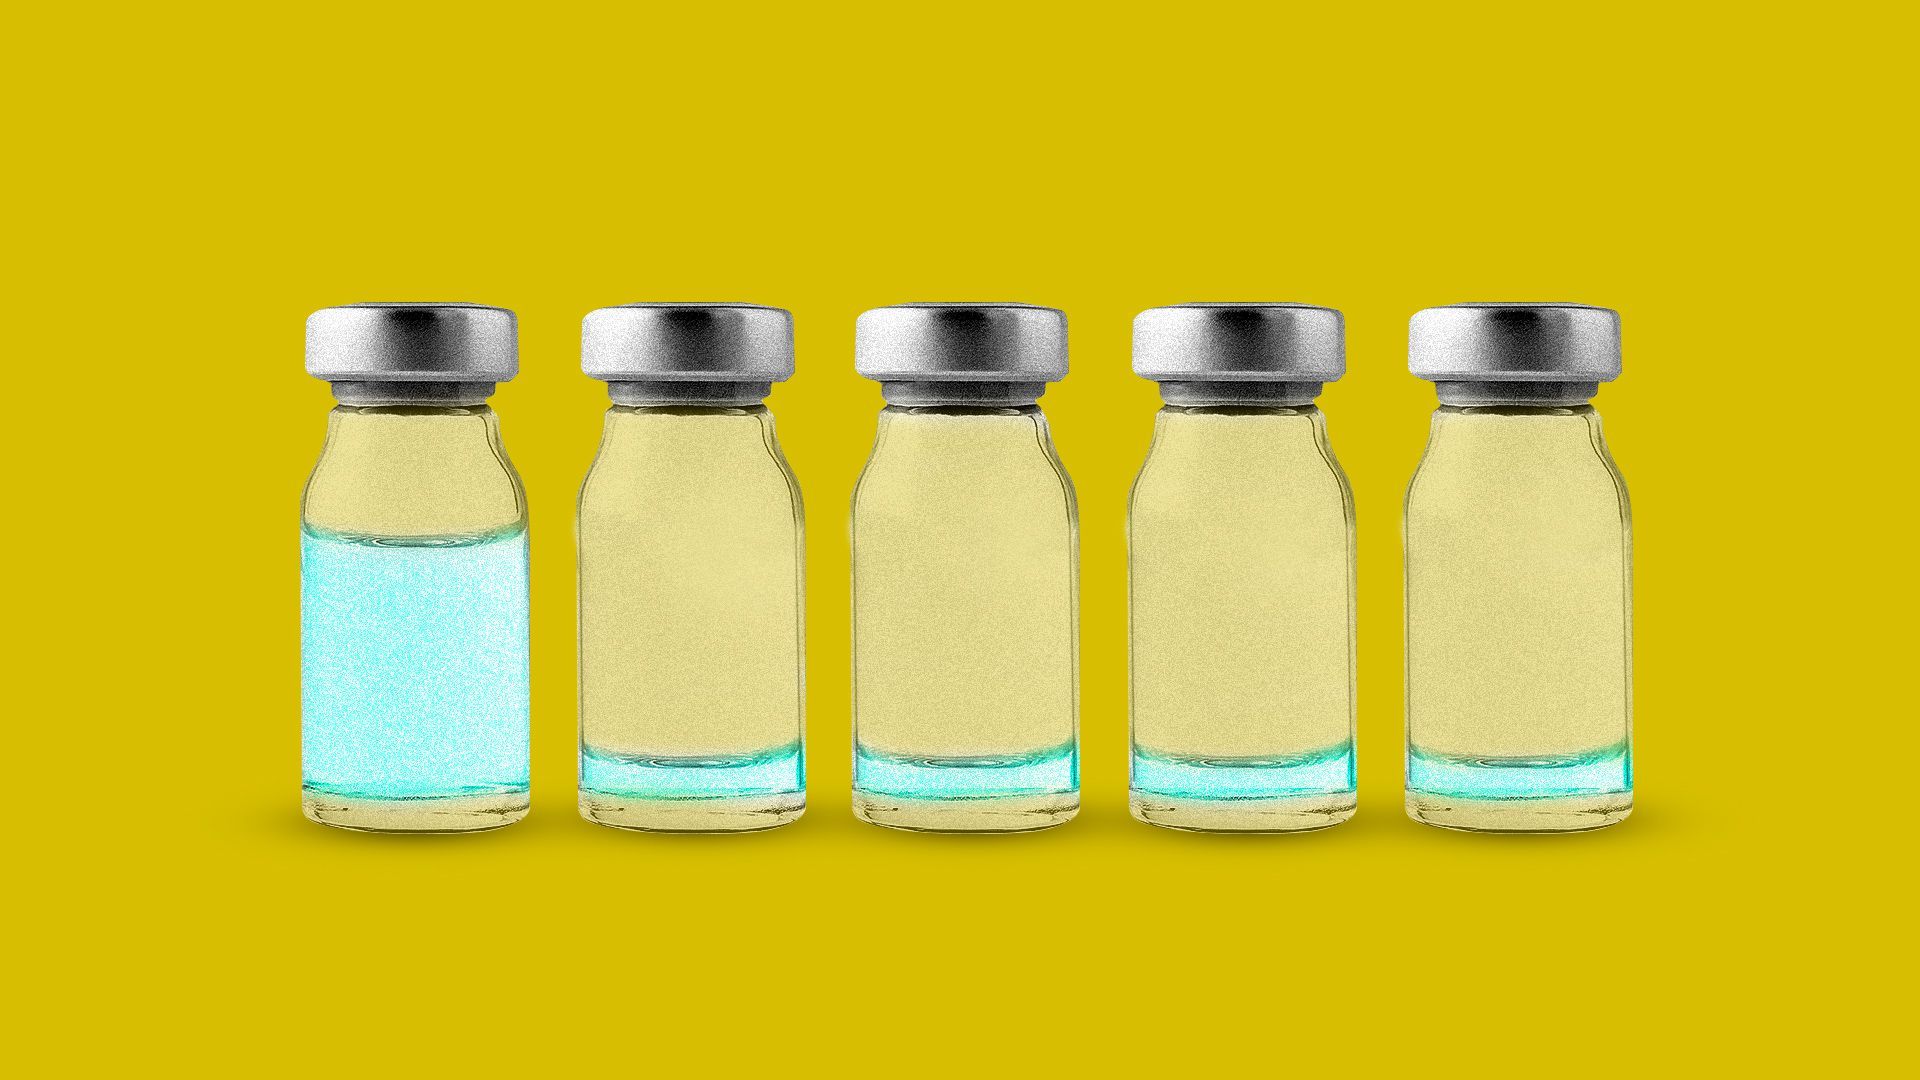 Illustration of 5 vaccine bottles, 4 are empty.  